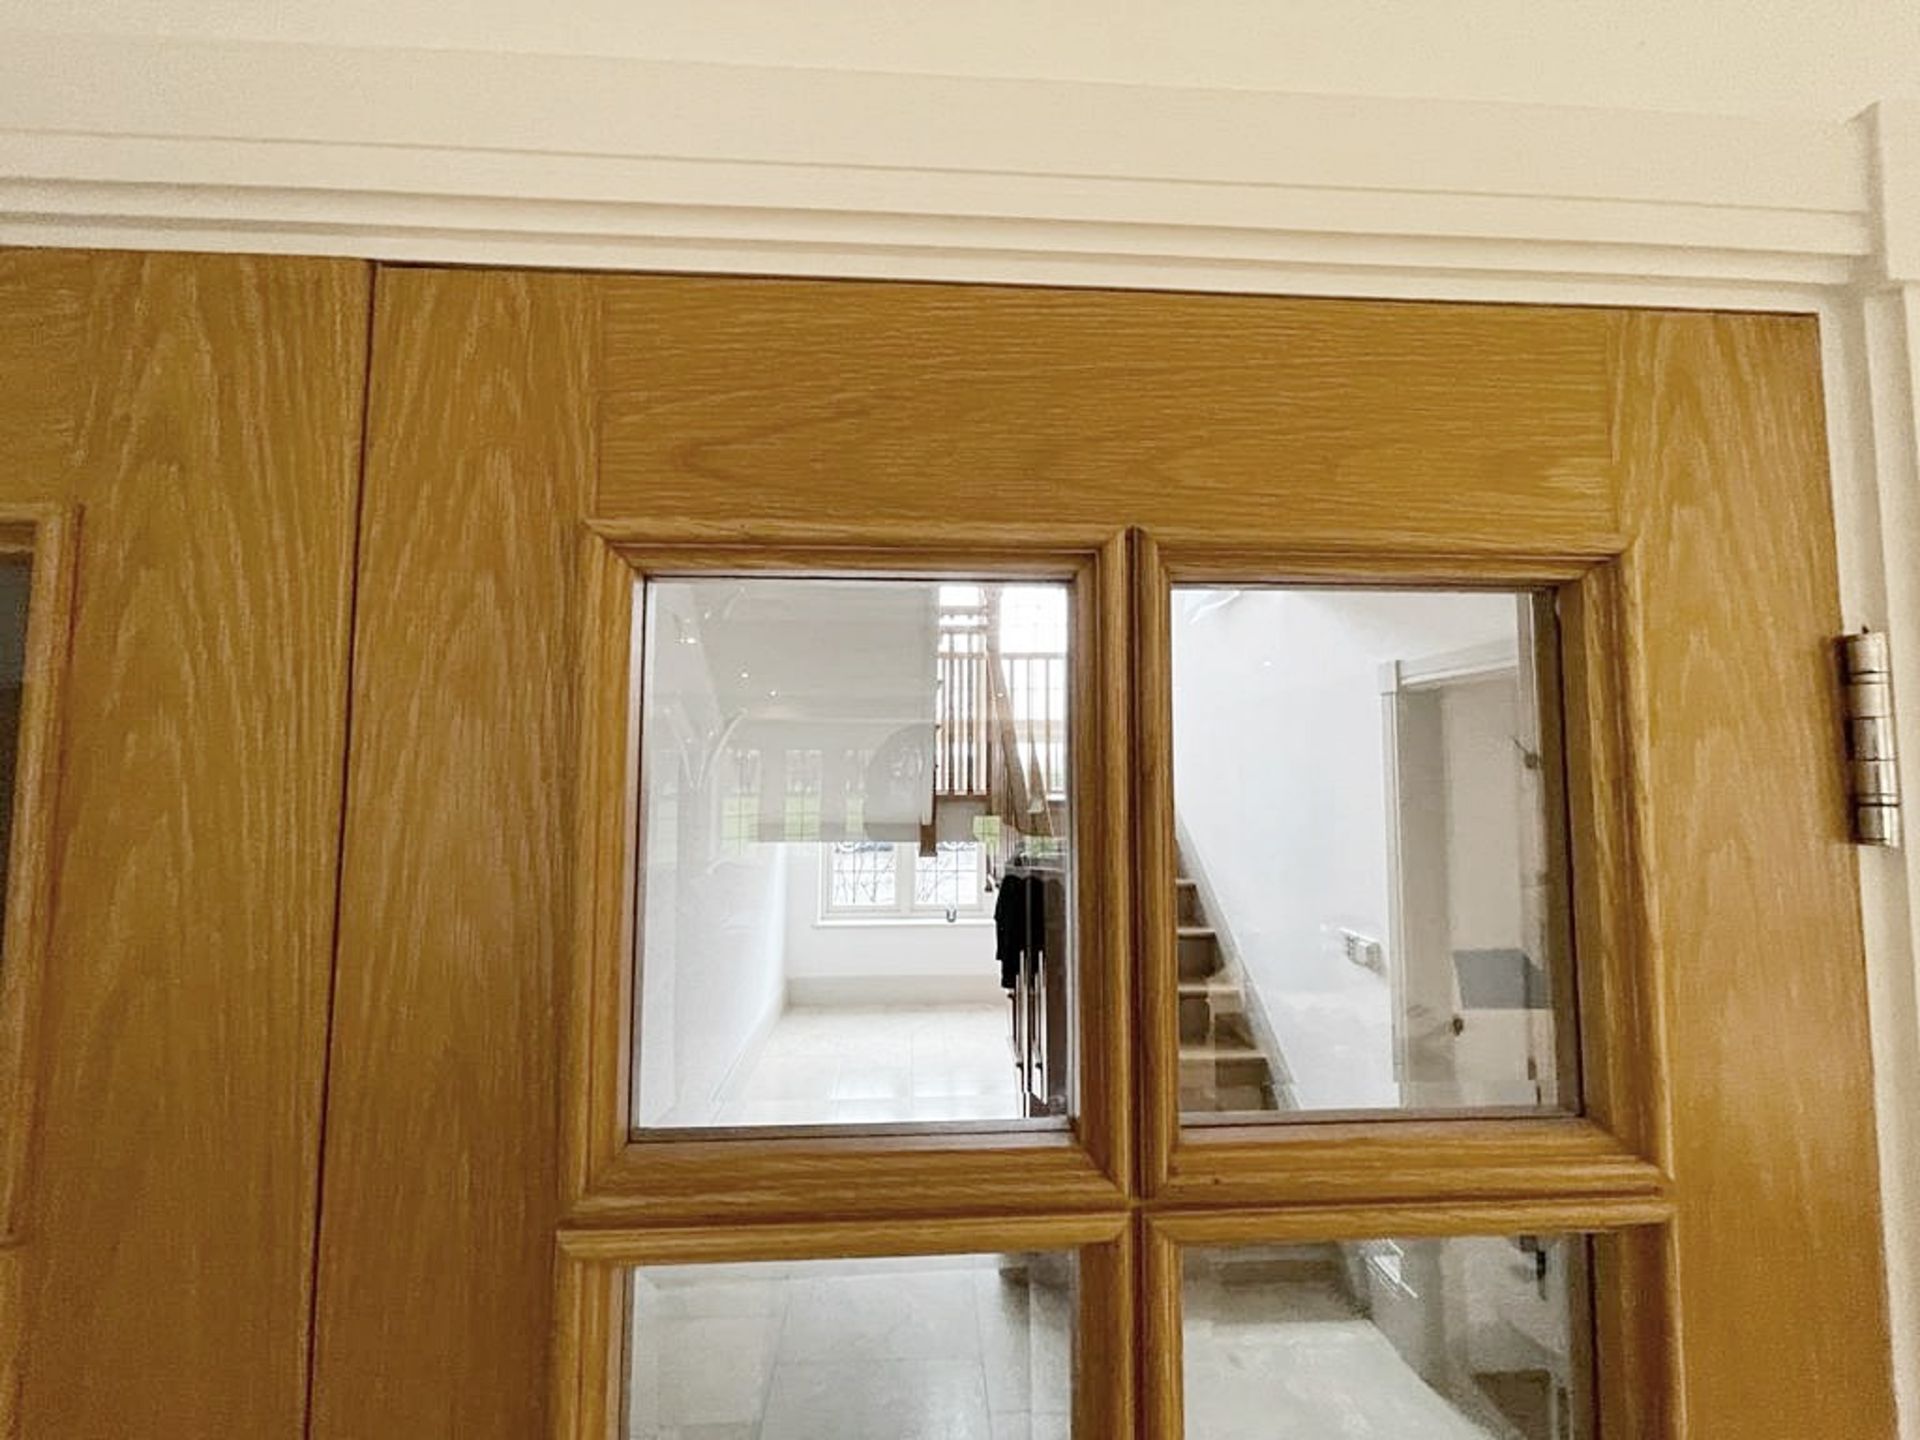 1 x Set Of Solid Oak Wood Glazed Internal Double Doors - Includes Hinges and Handles - NO VAT - Image 5 of 6